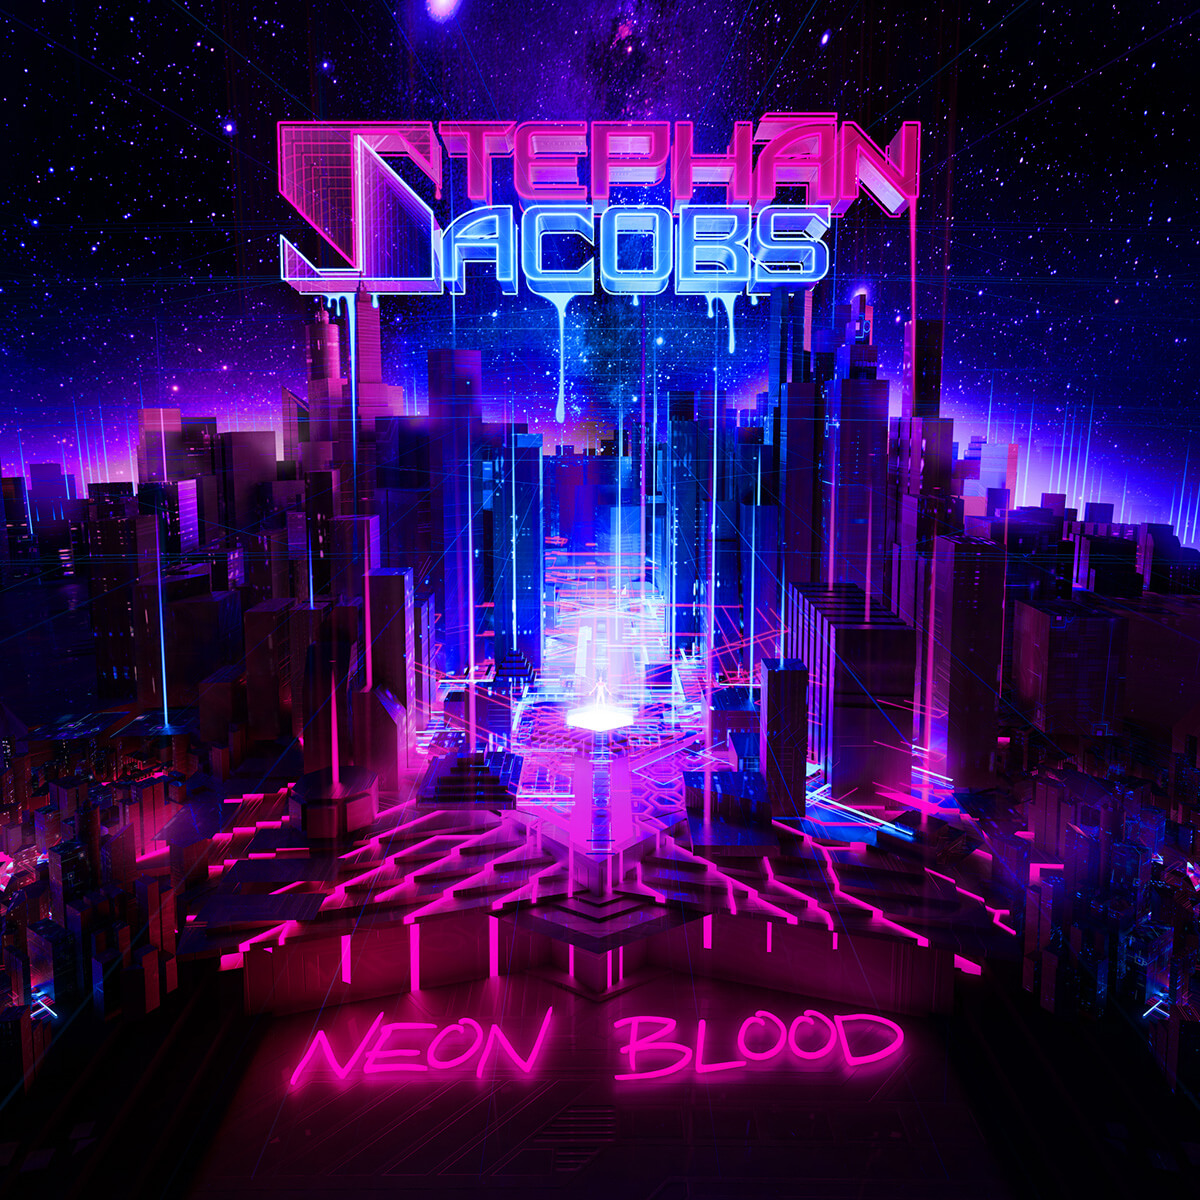 Neon Blood Cover Art by Axon Genesis